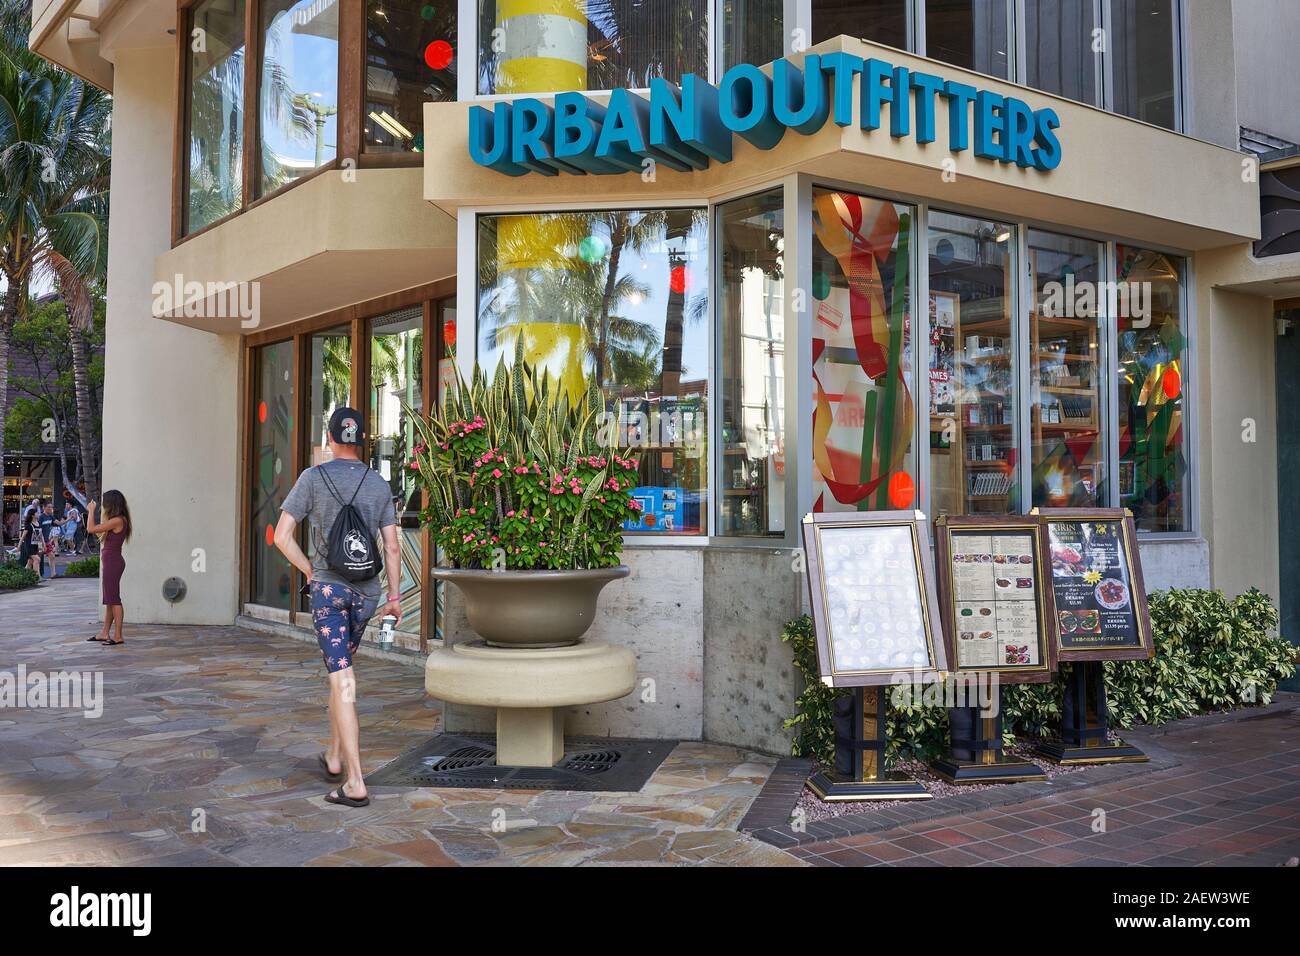 An Urban Outfitters lifestyle retail store in the Waikiki neighborhood in Honolulu, Hawaii, on Nov 25, 2019. Stock Photo